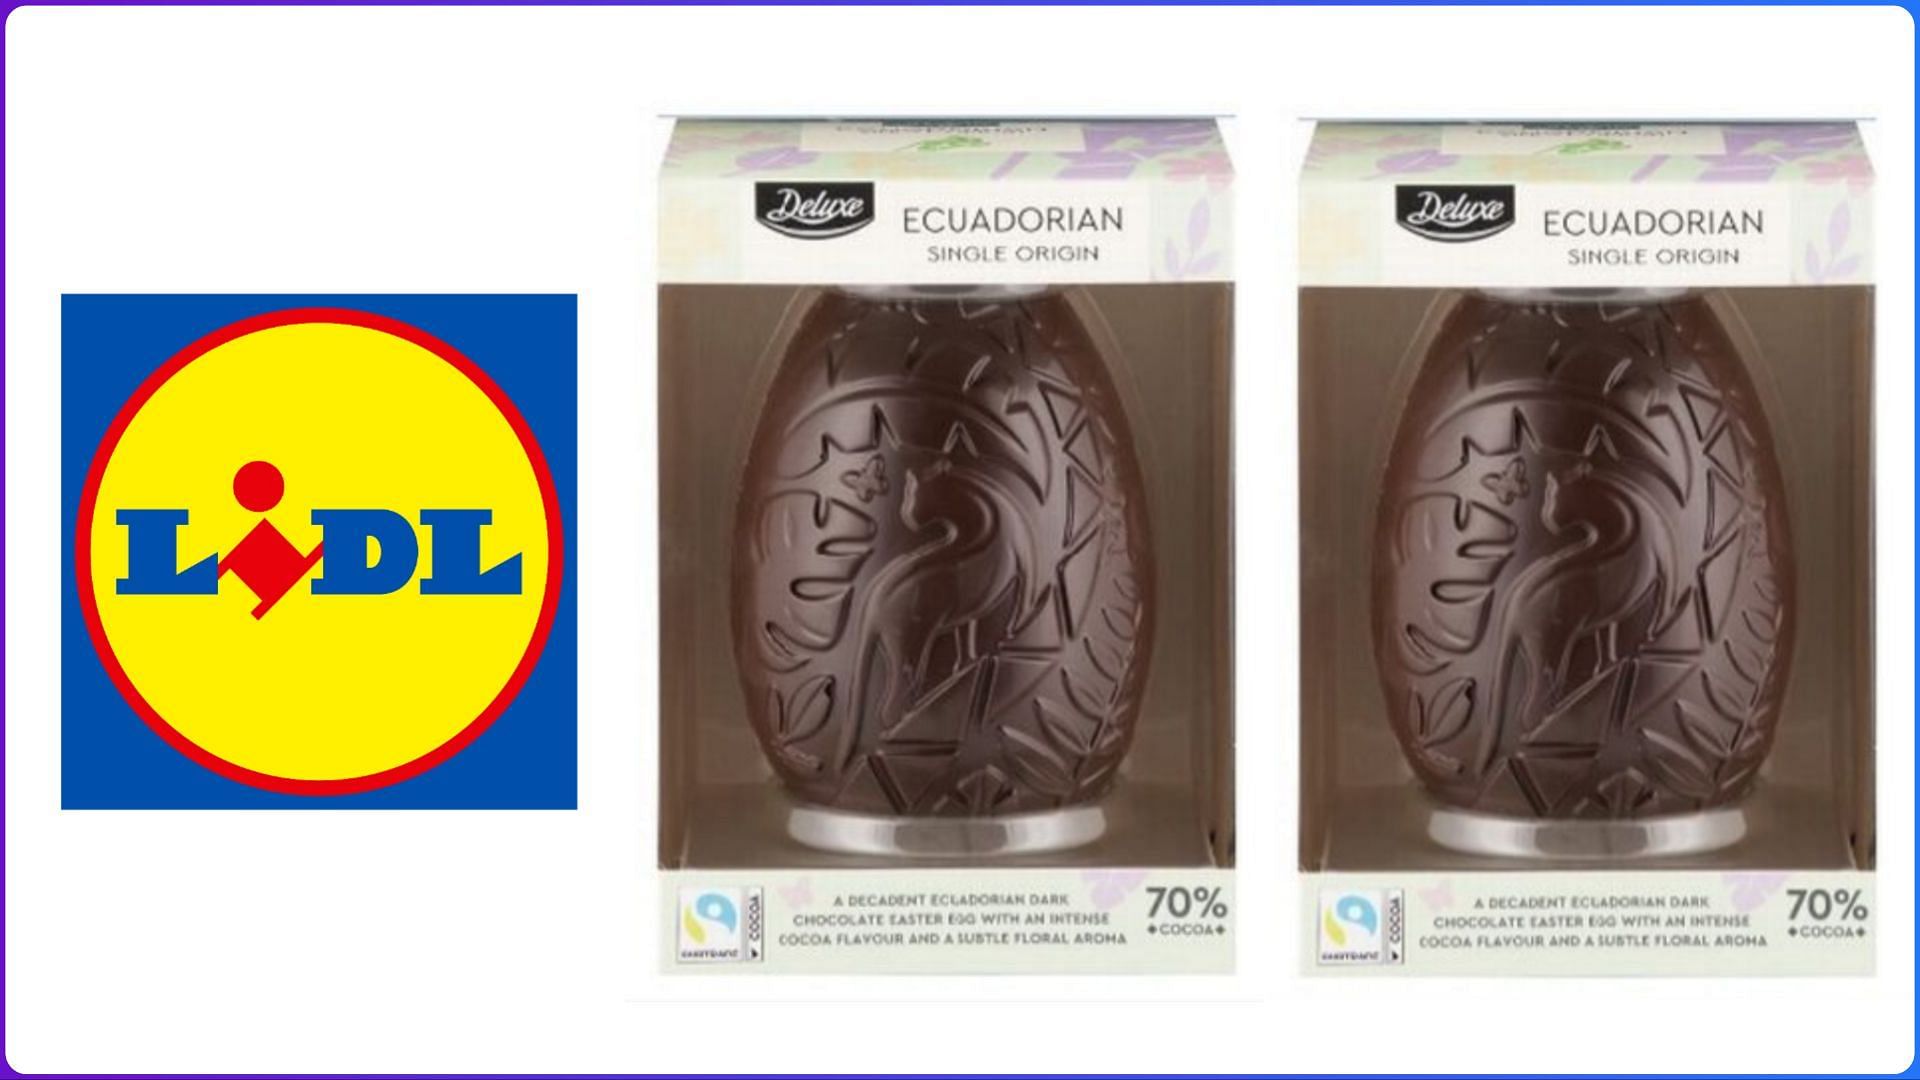 Deluxe Ecuadorian Single Origin Easter Eggs sold in the UK may contain undeclared milk allergens (Image via Lidl)